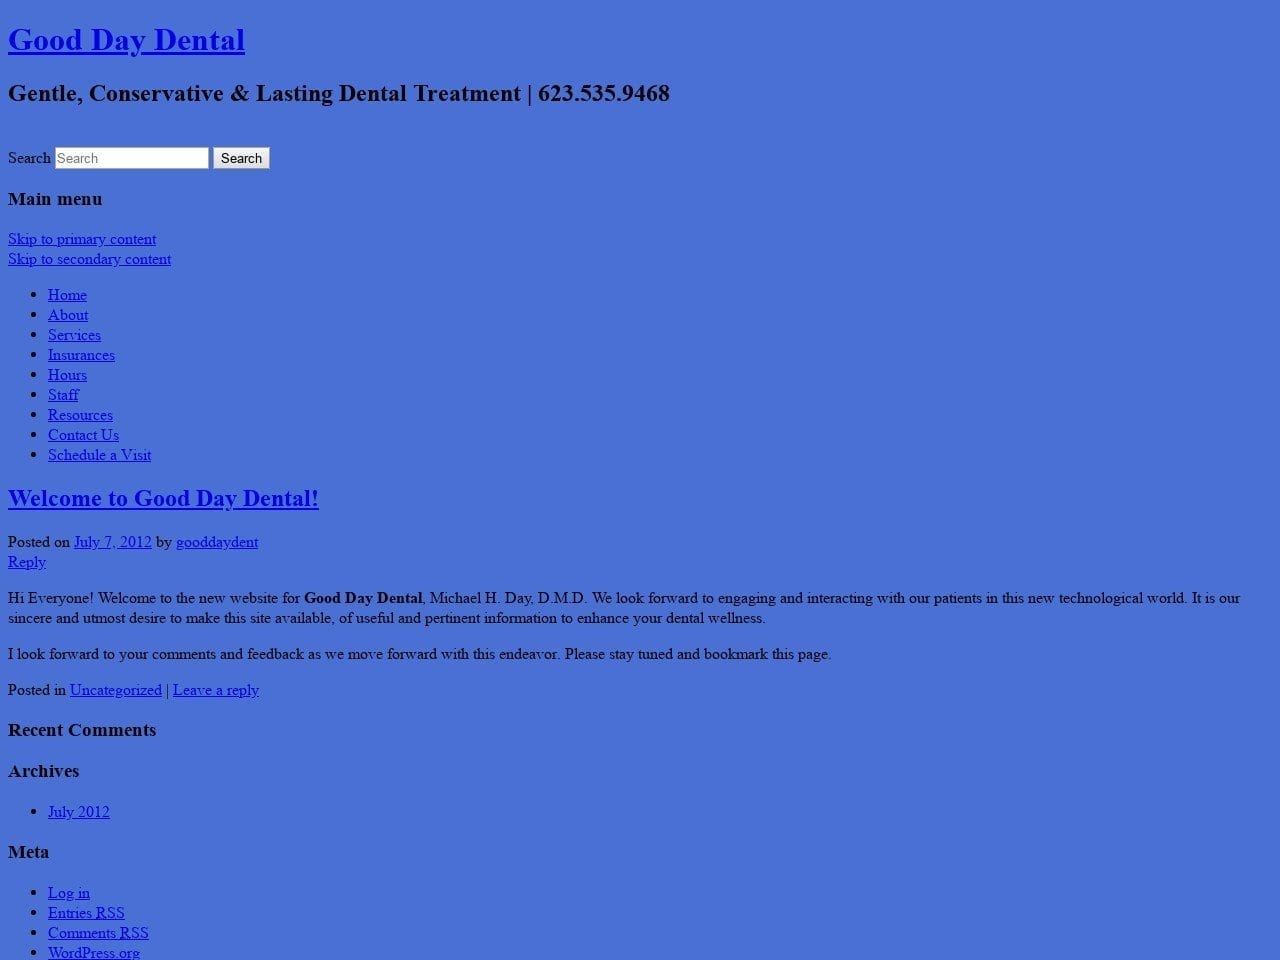 Good Day Dental Website Screenshot from drday.biz